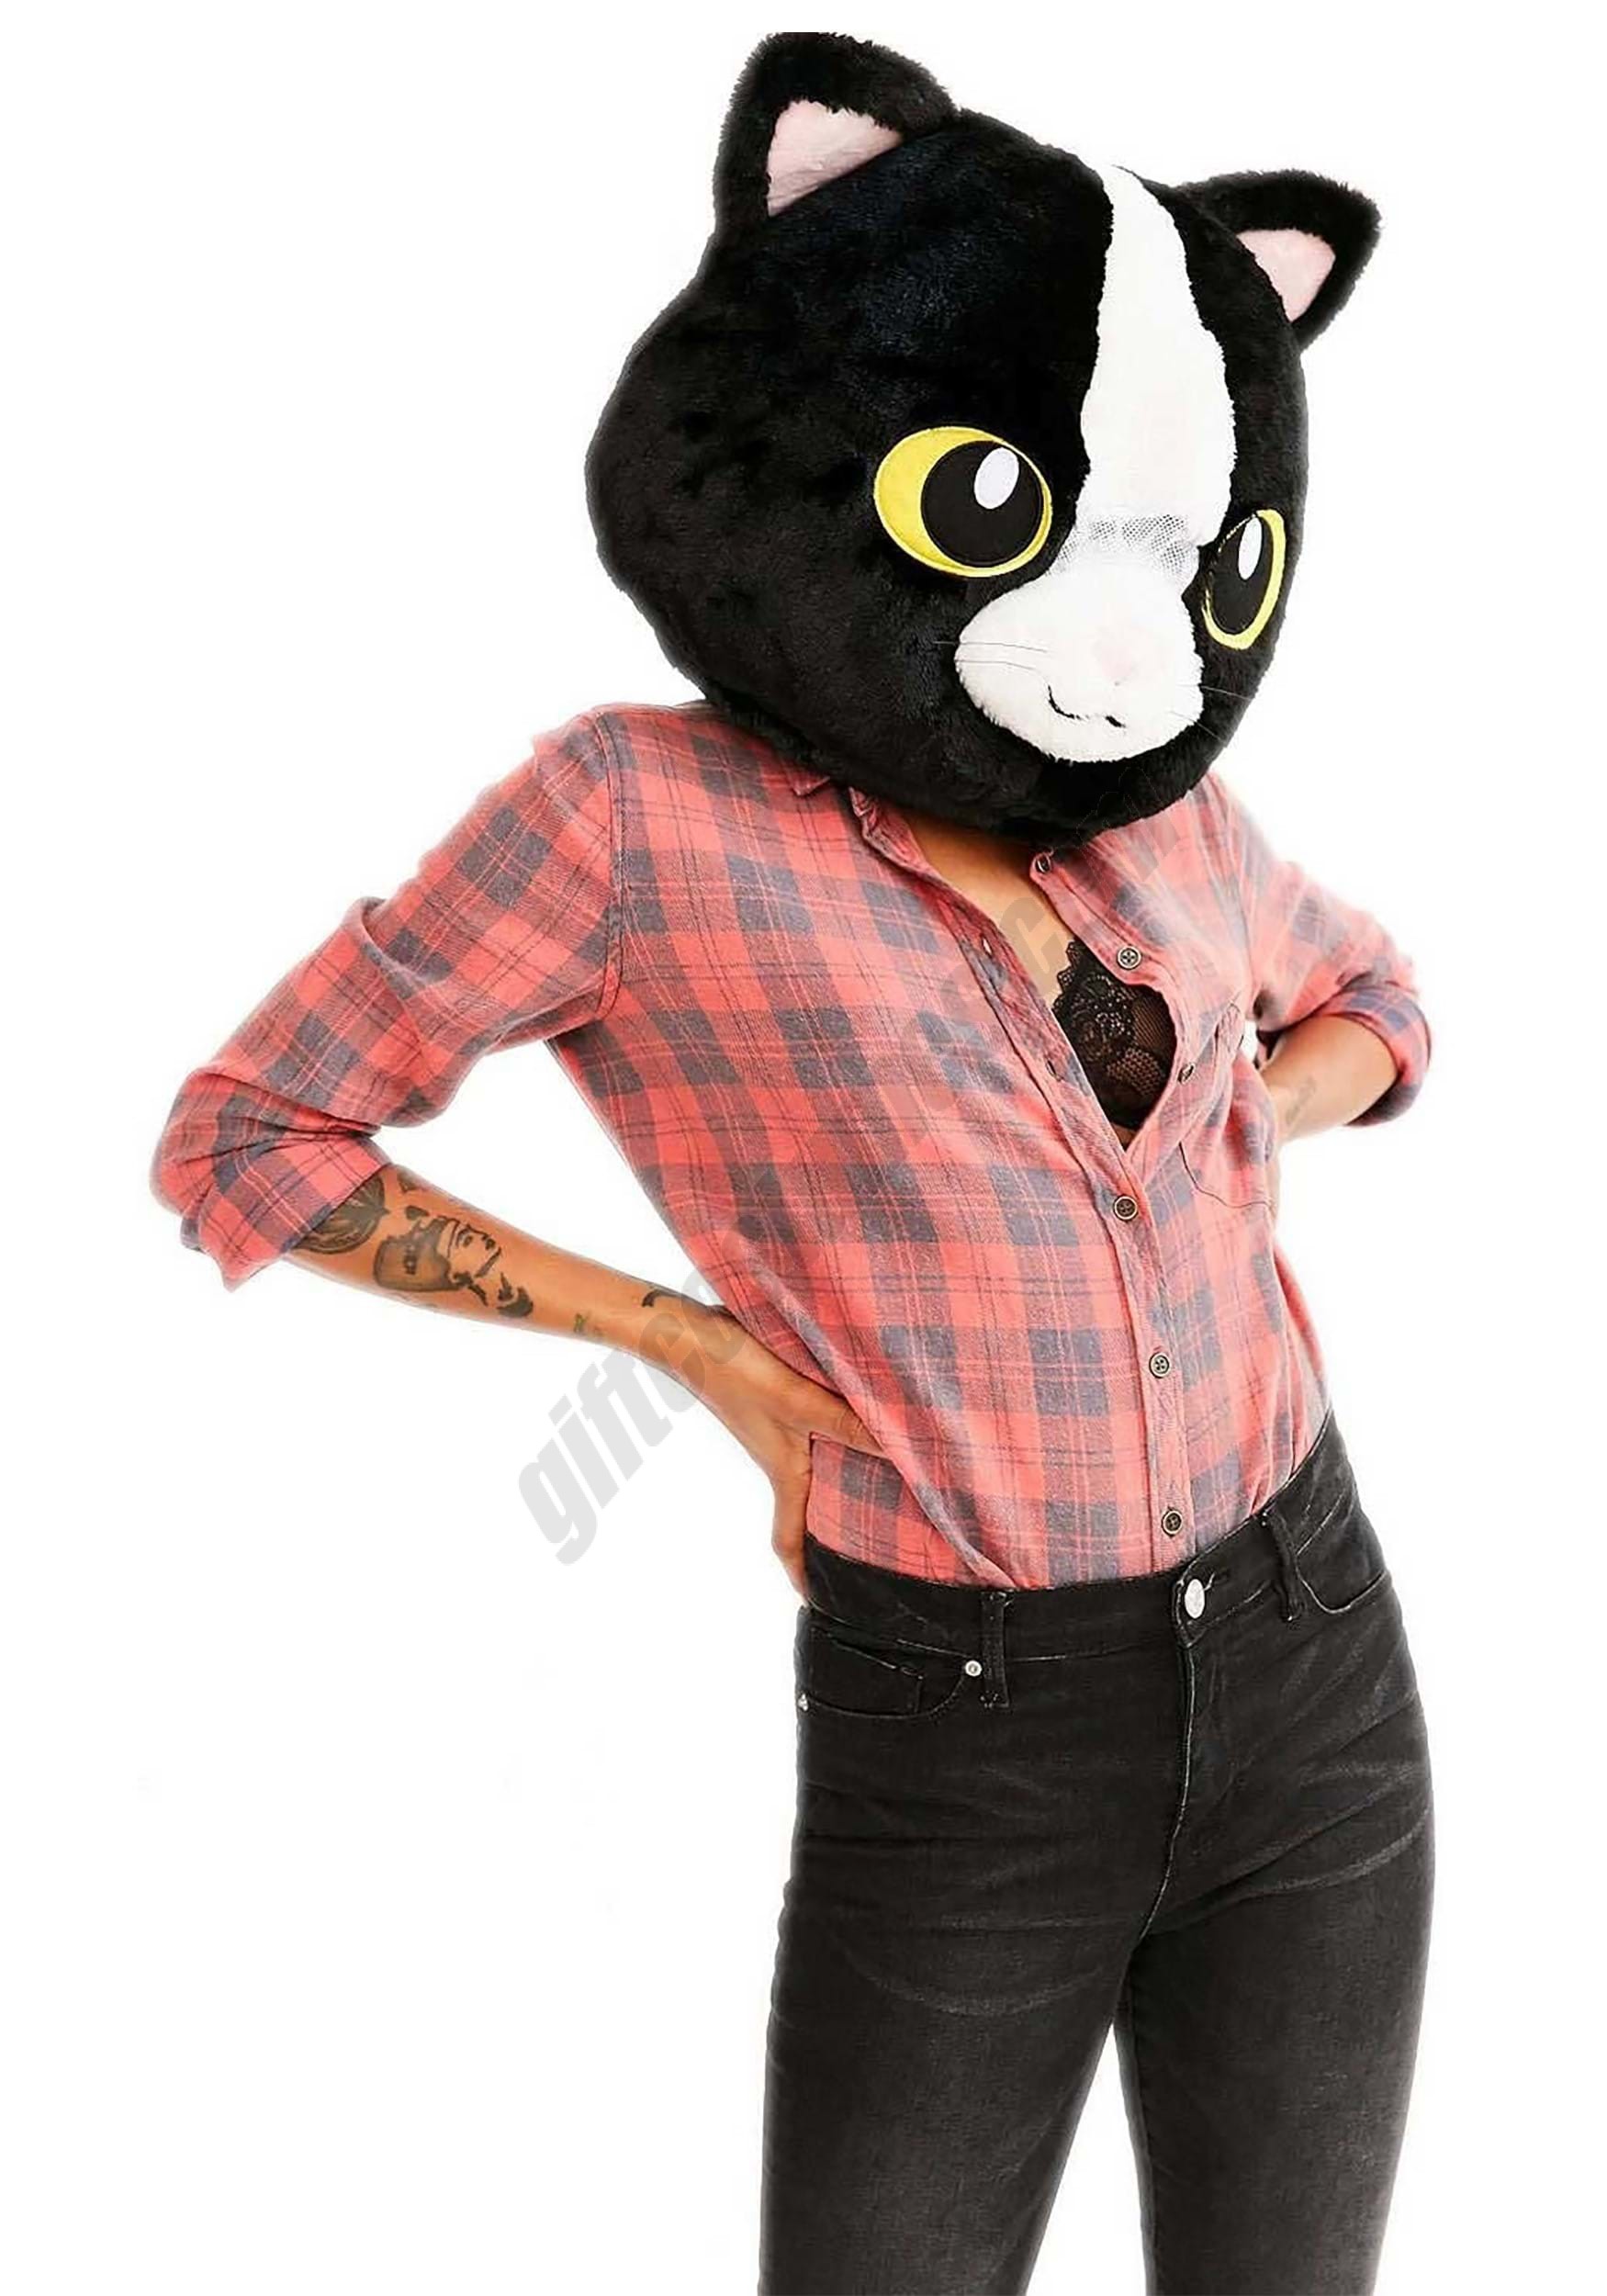 Adult Black Cat Mascot Head Mask Promotions - Adult Black Cat Mascot Head Mask Promotions